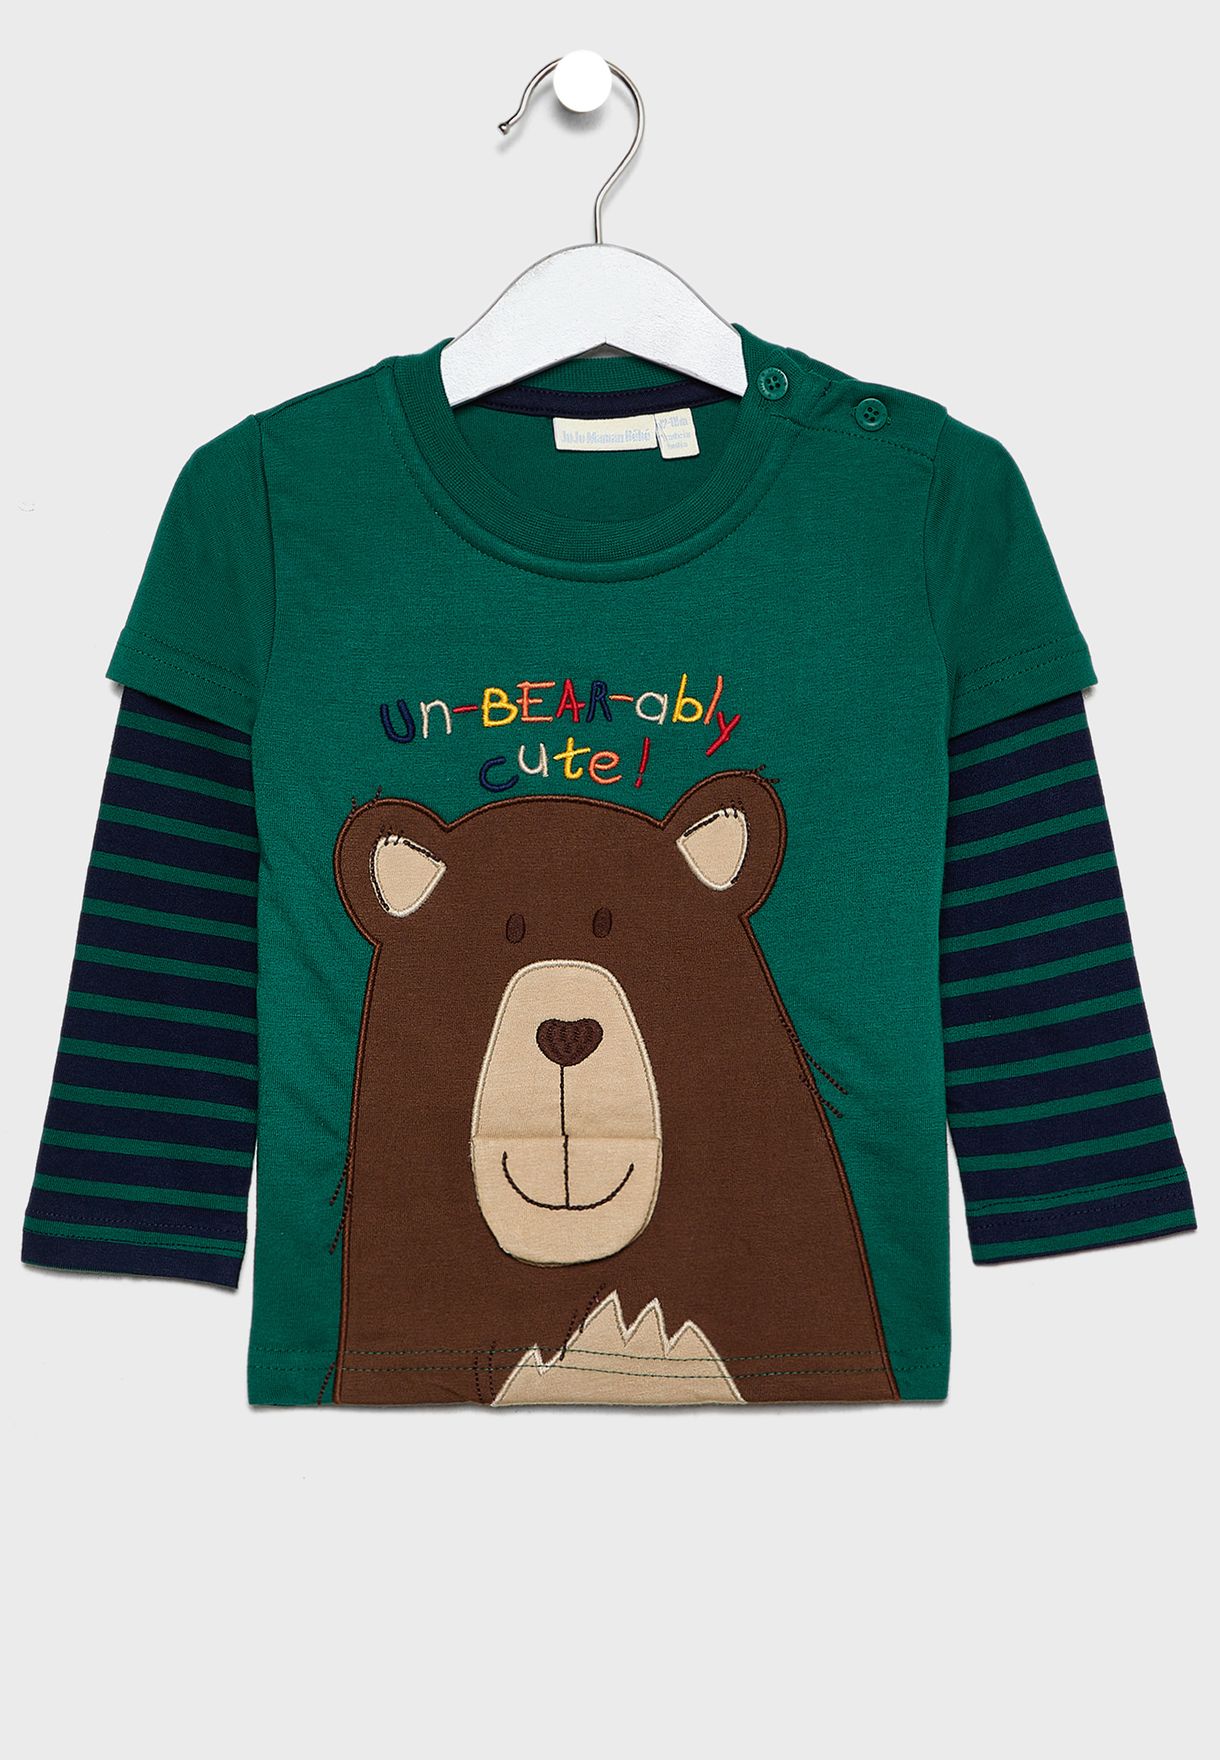 kids bear shirt